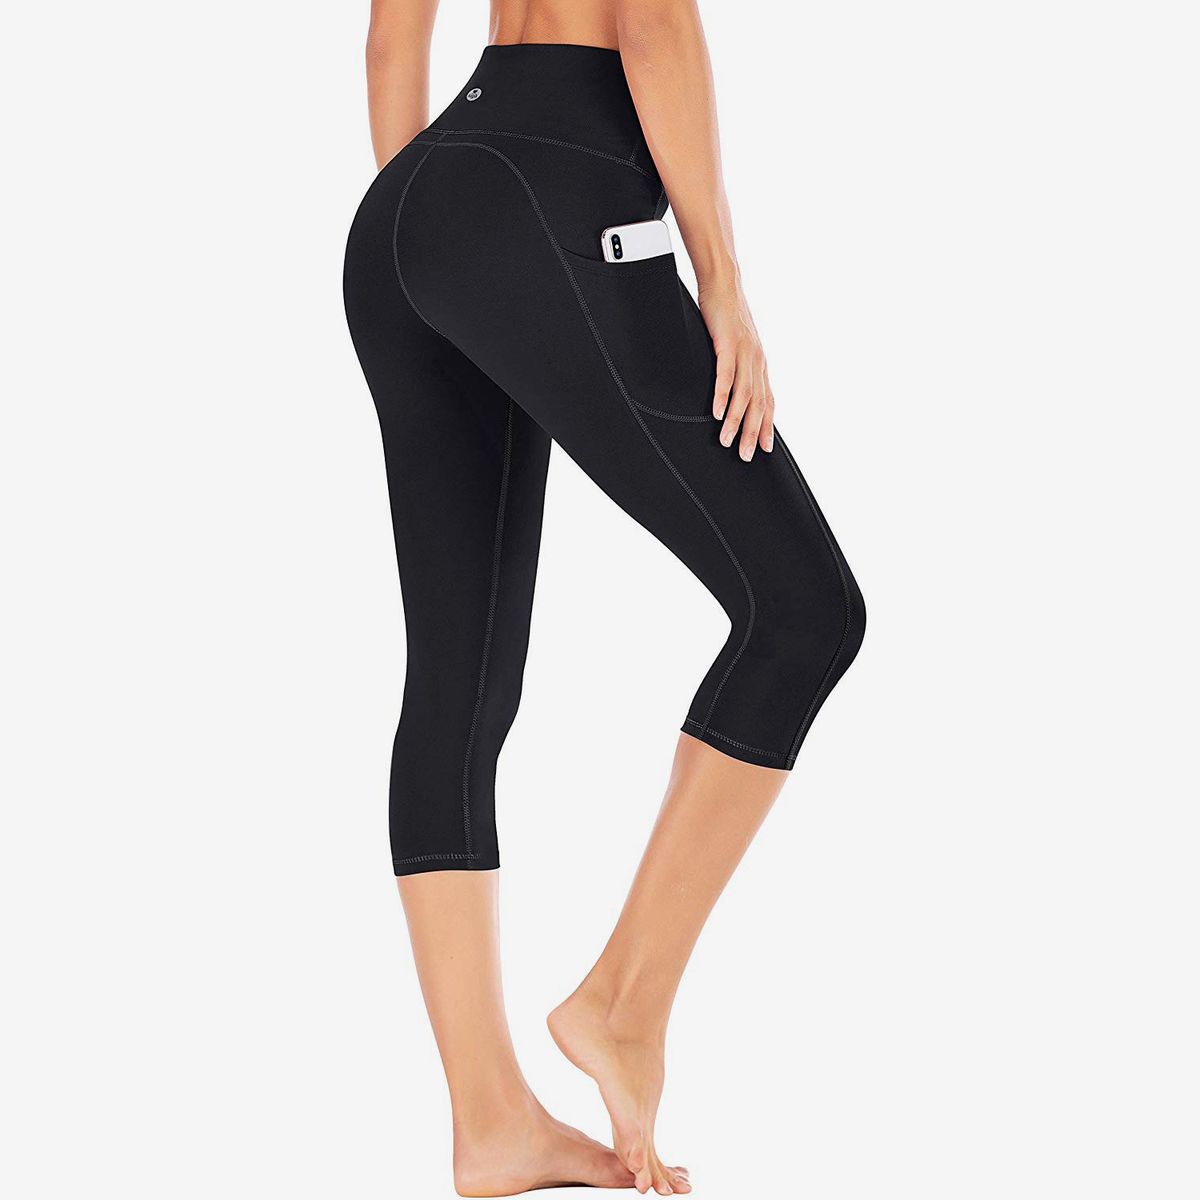 Womens Lace Trim Soft Modal Cotton Leggings Workout Tights Pants Cropped Trousers Yoga Capri Pants Plus Size